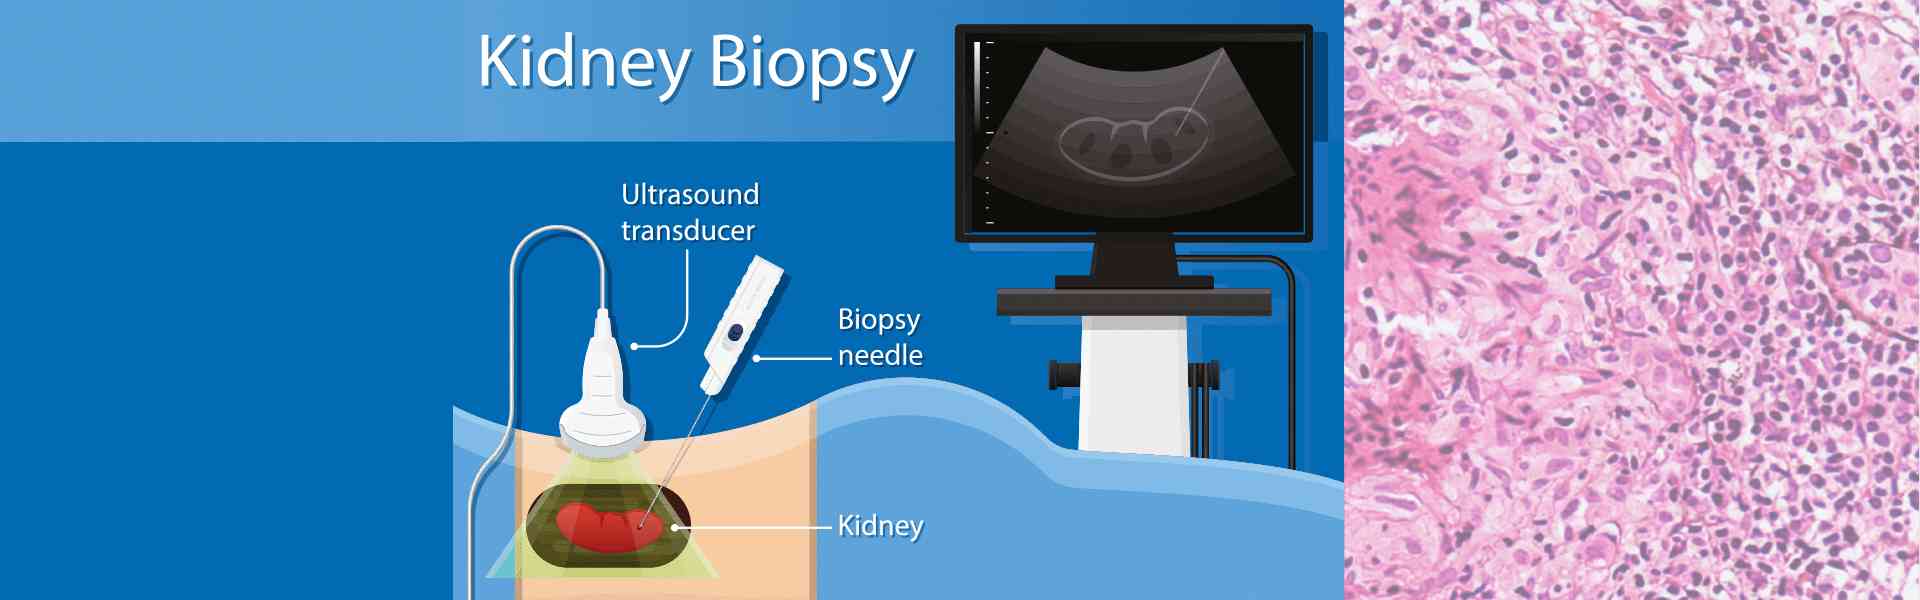 Kidney Biopsy Treatment in Kharadi